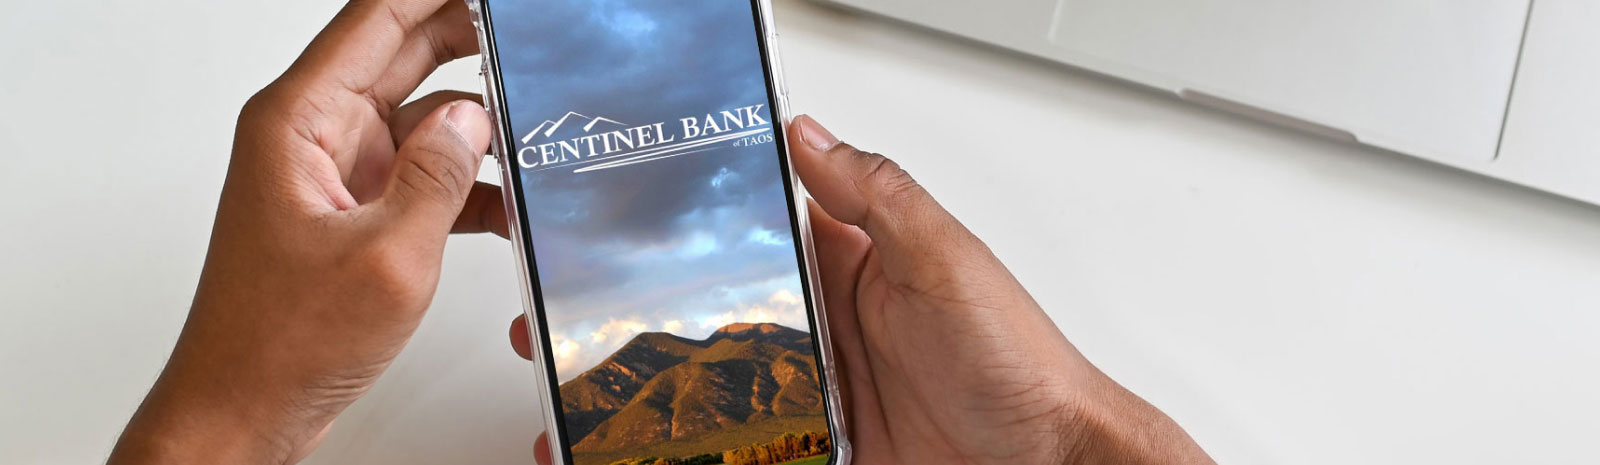 bank app on phone